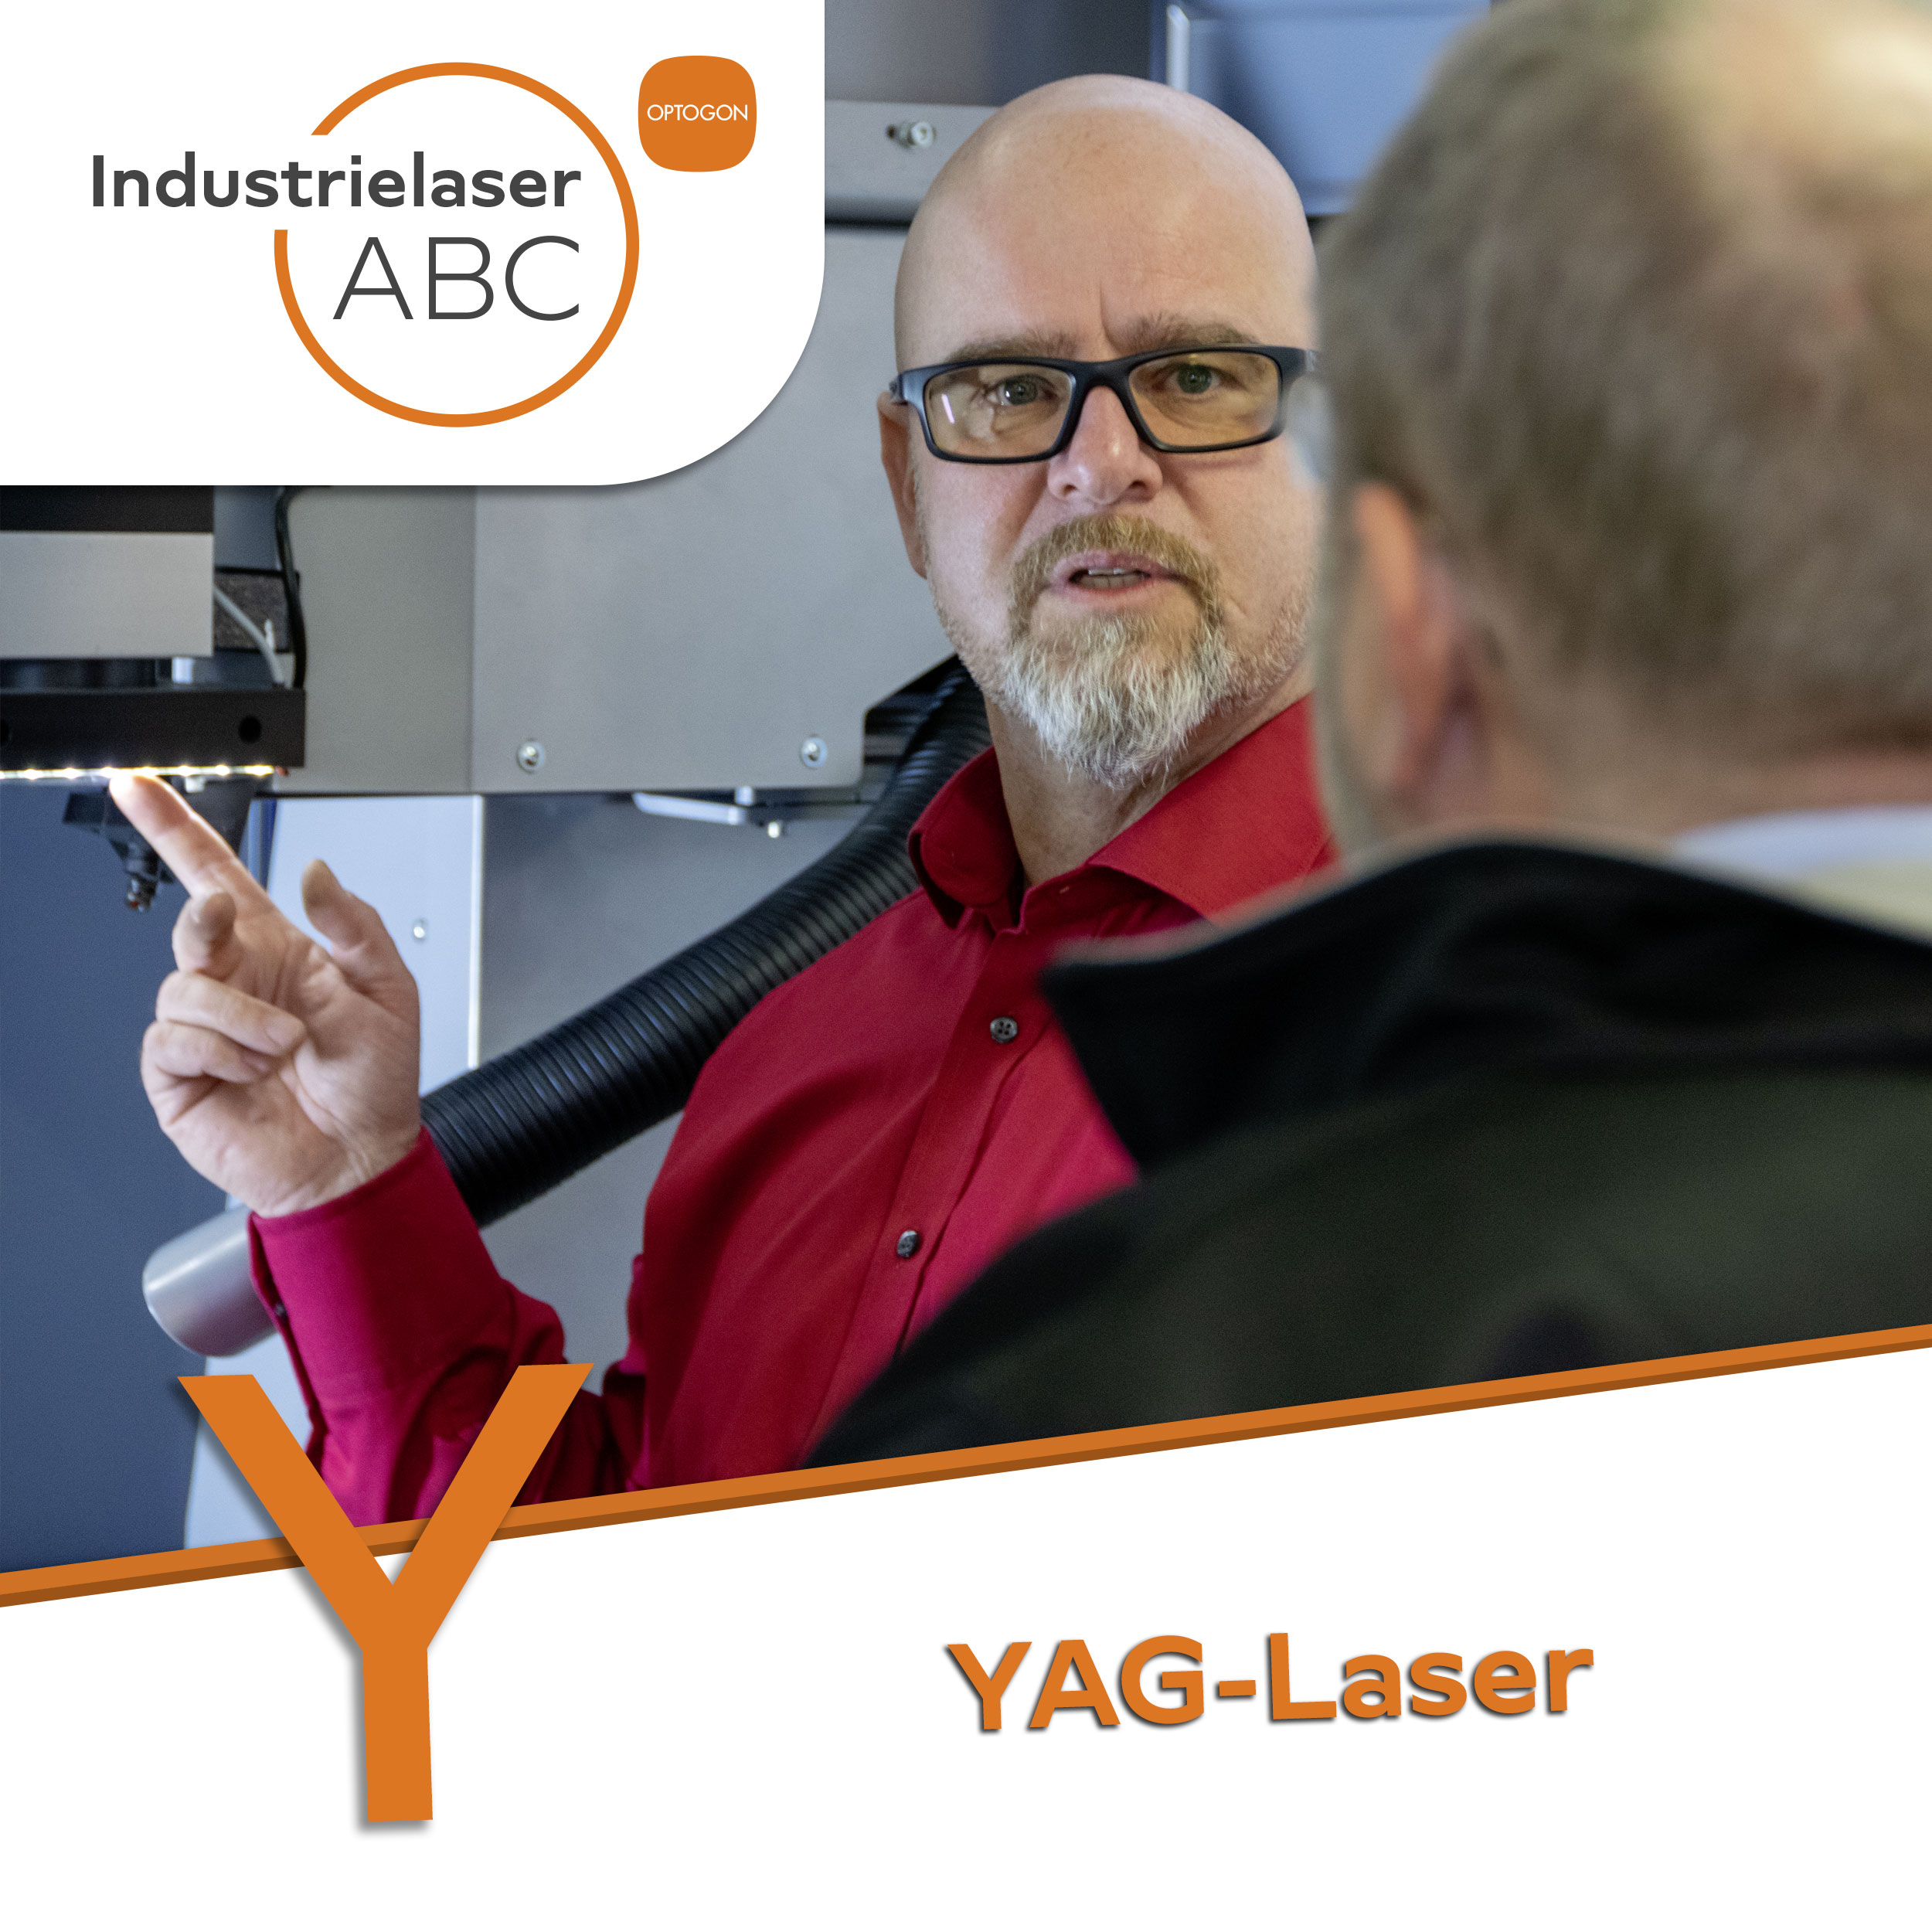 Industrielaser YAG-Laser